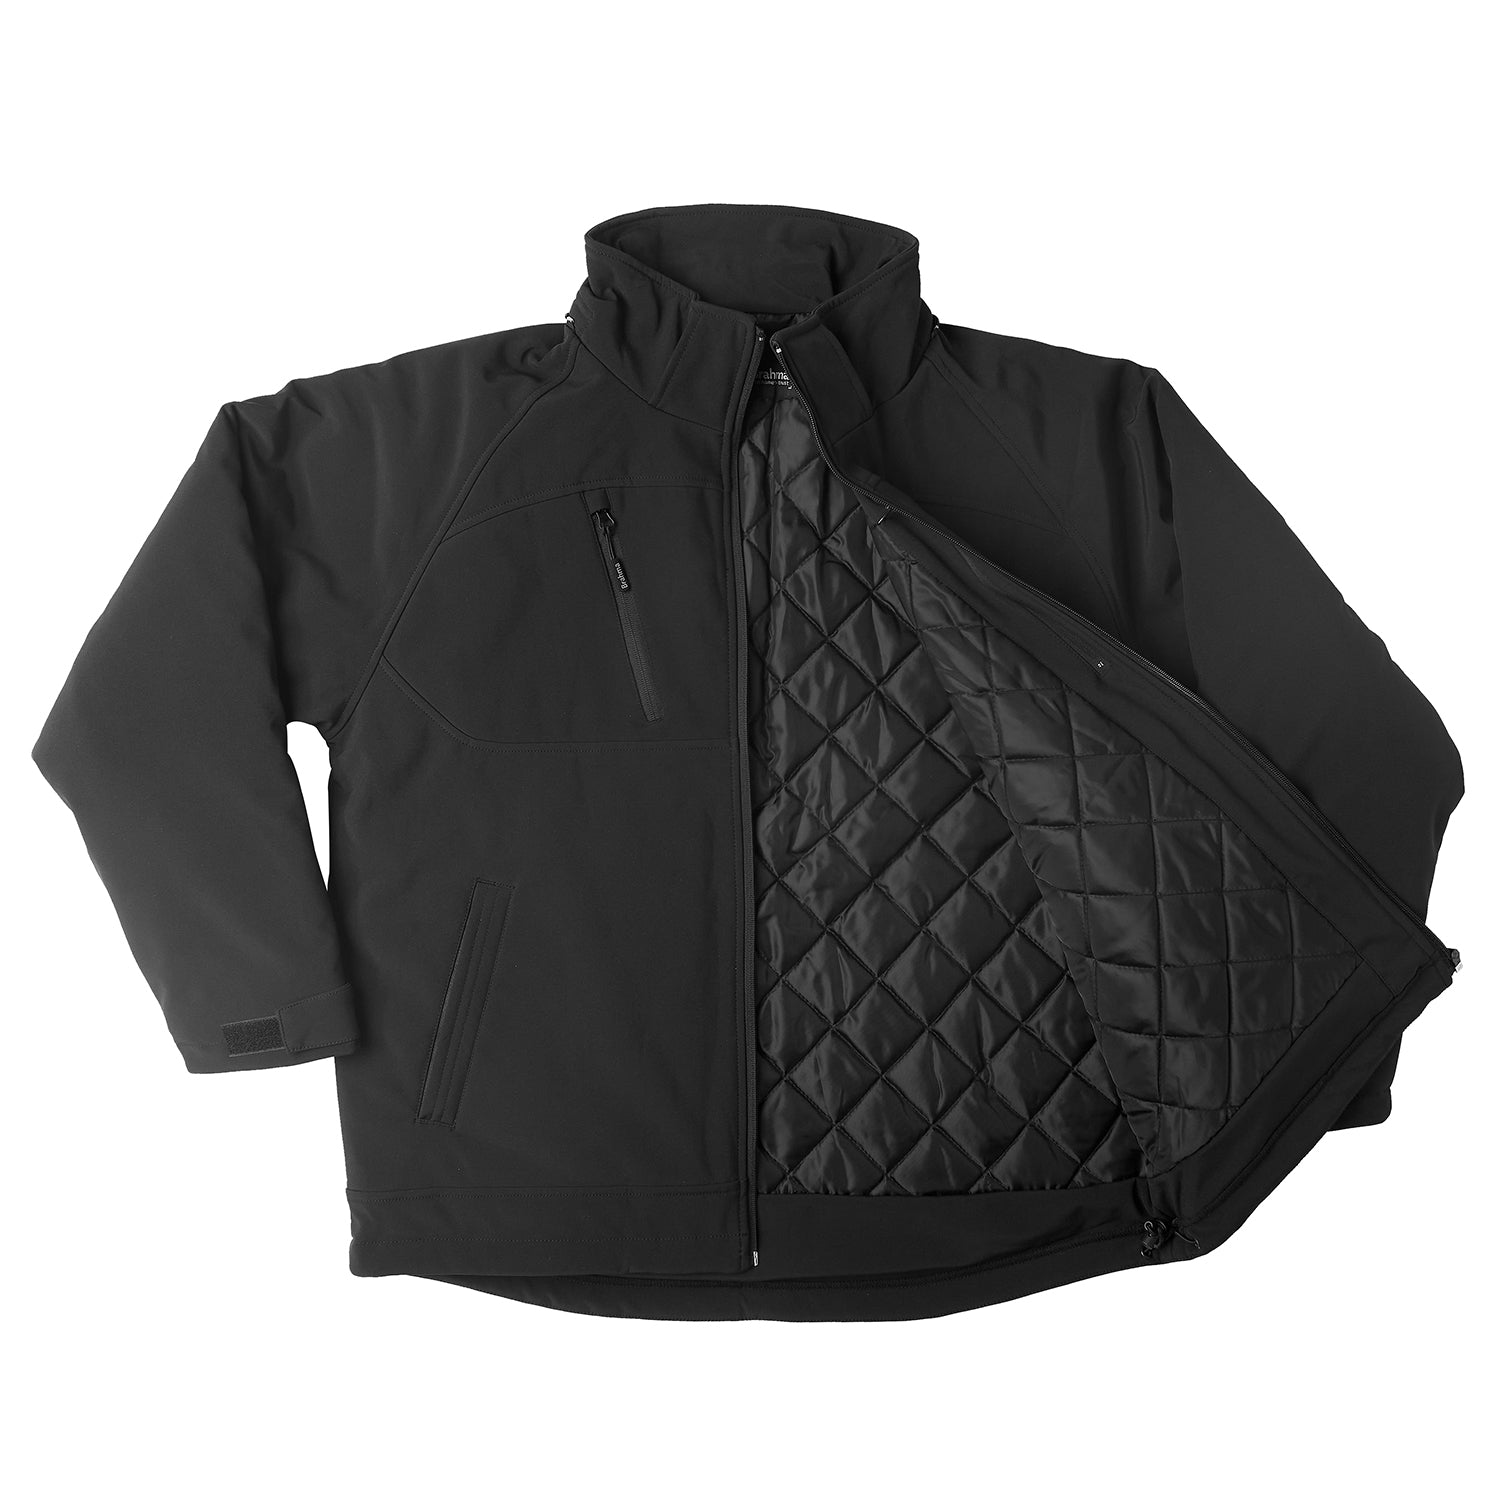 Brahma Cradle Mountain Series 2 Jacket - Black with hood removed